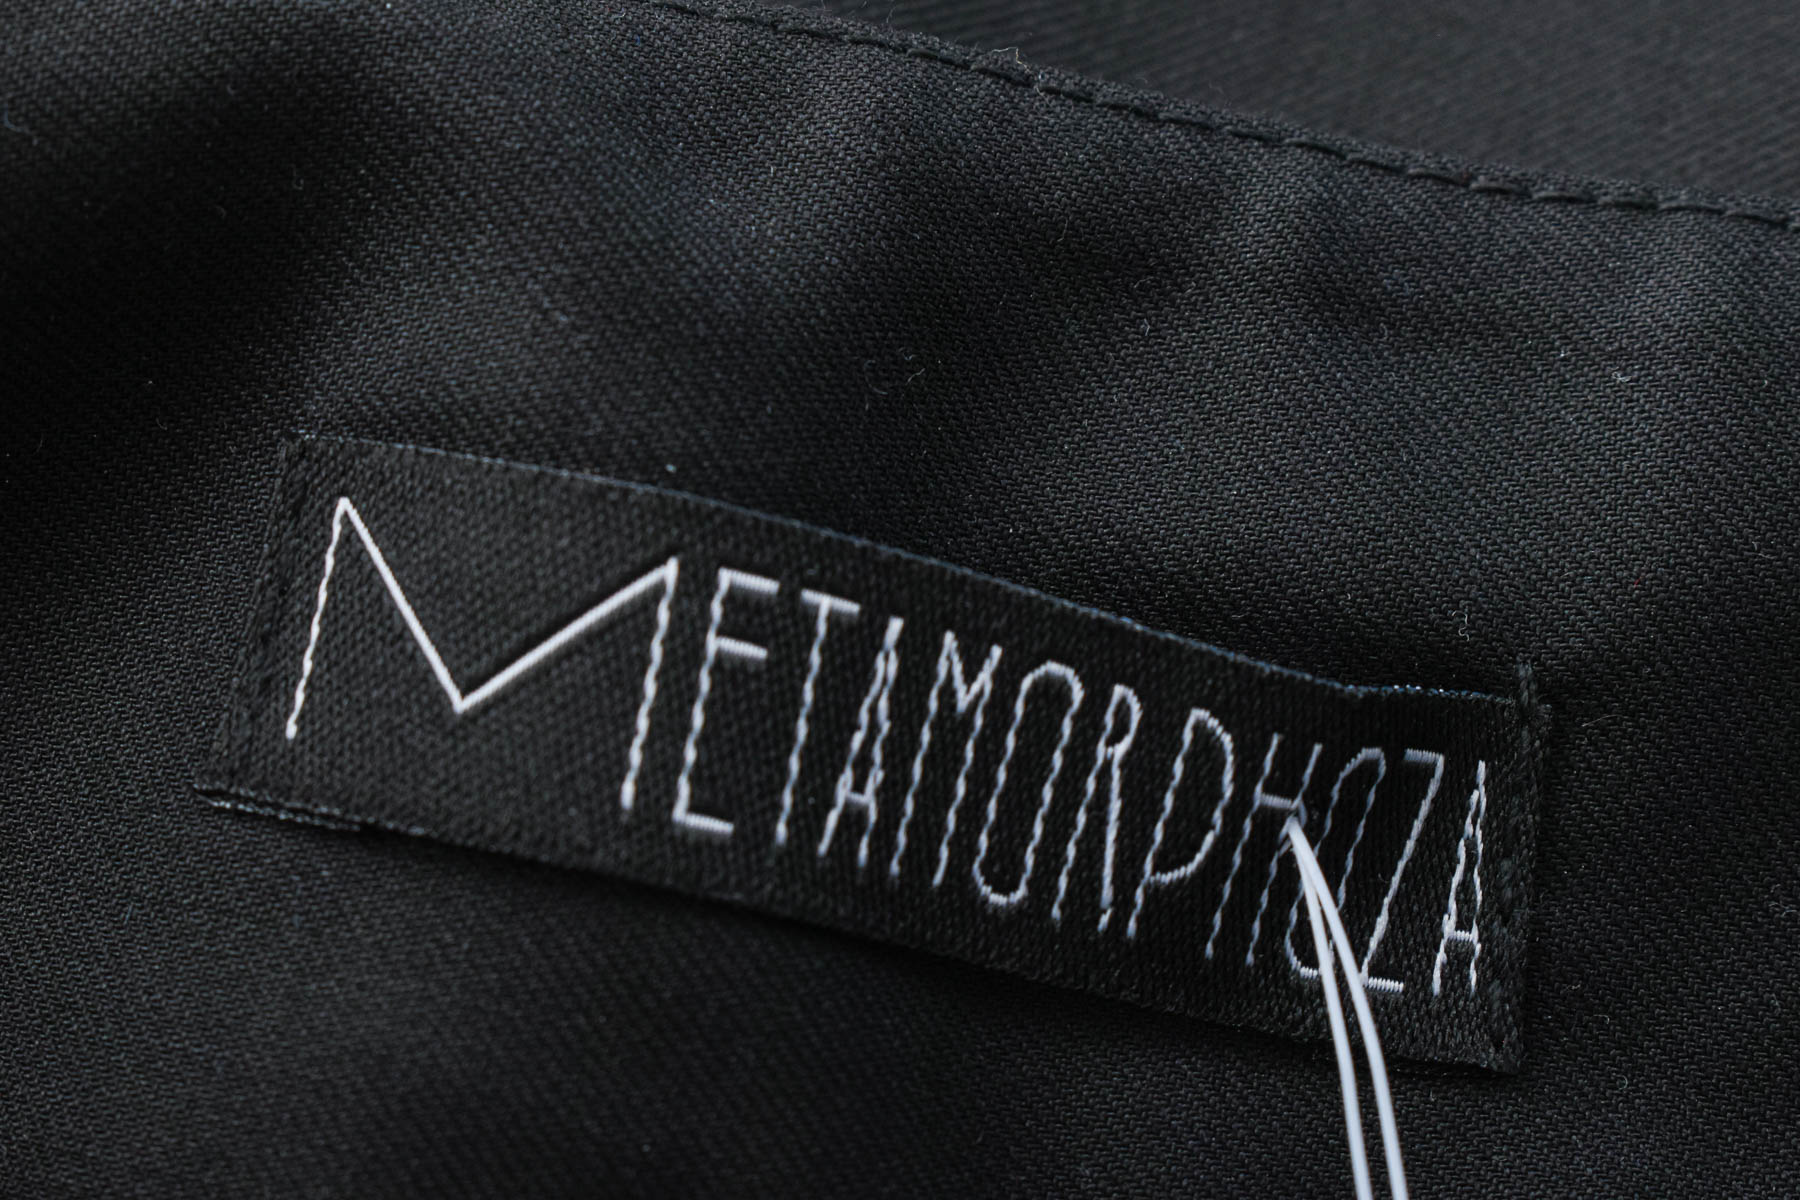 Pantaloni de damă - METAMORPHOZA - 2